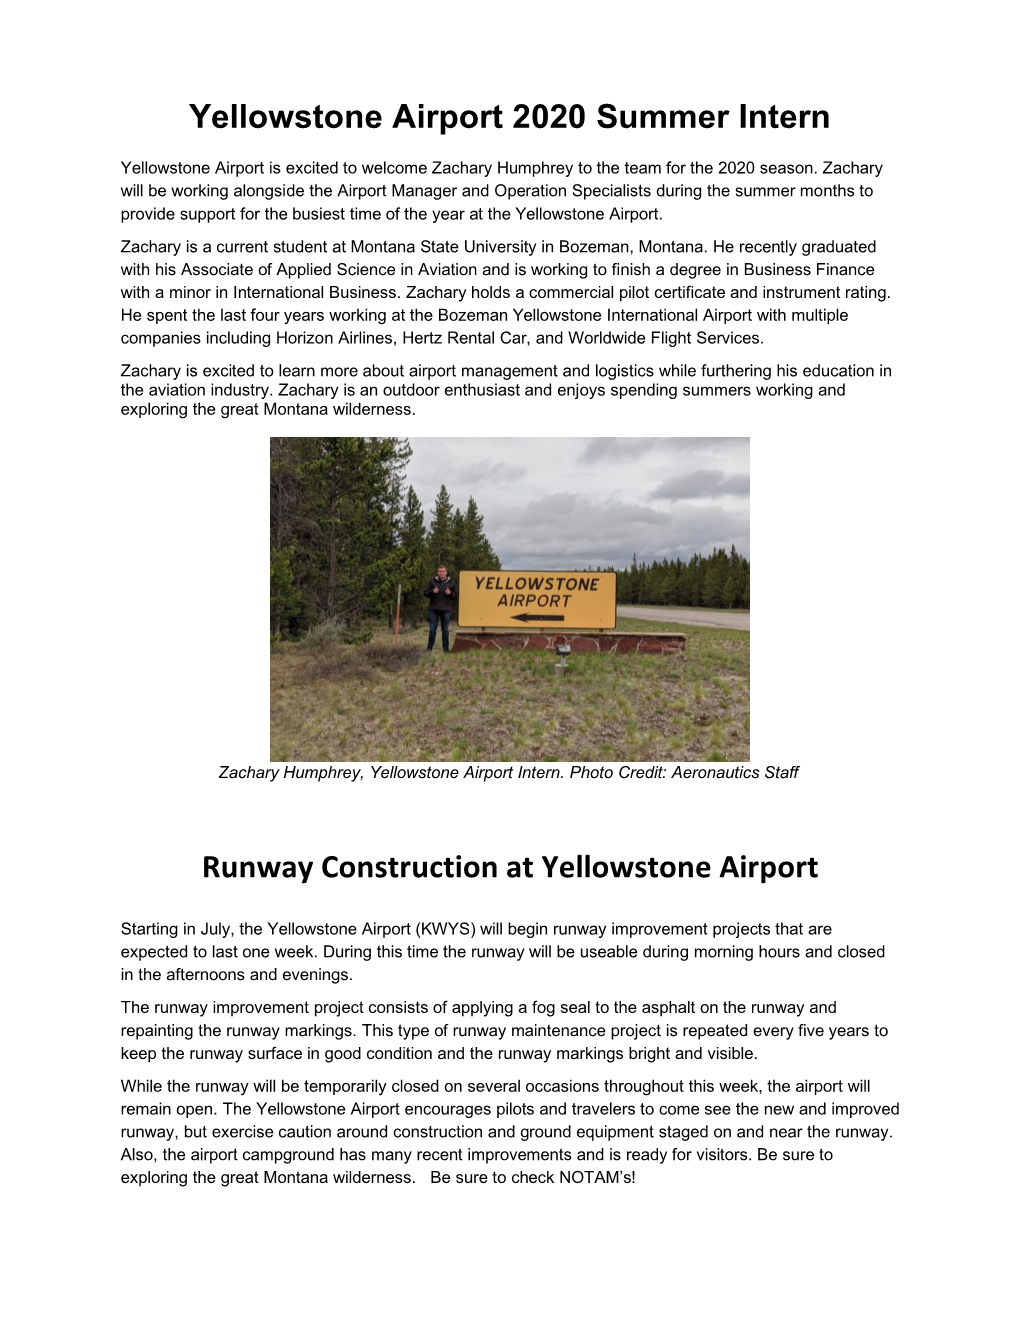 Yellowstone Airport Summer Intern July 2020